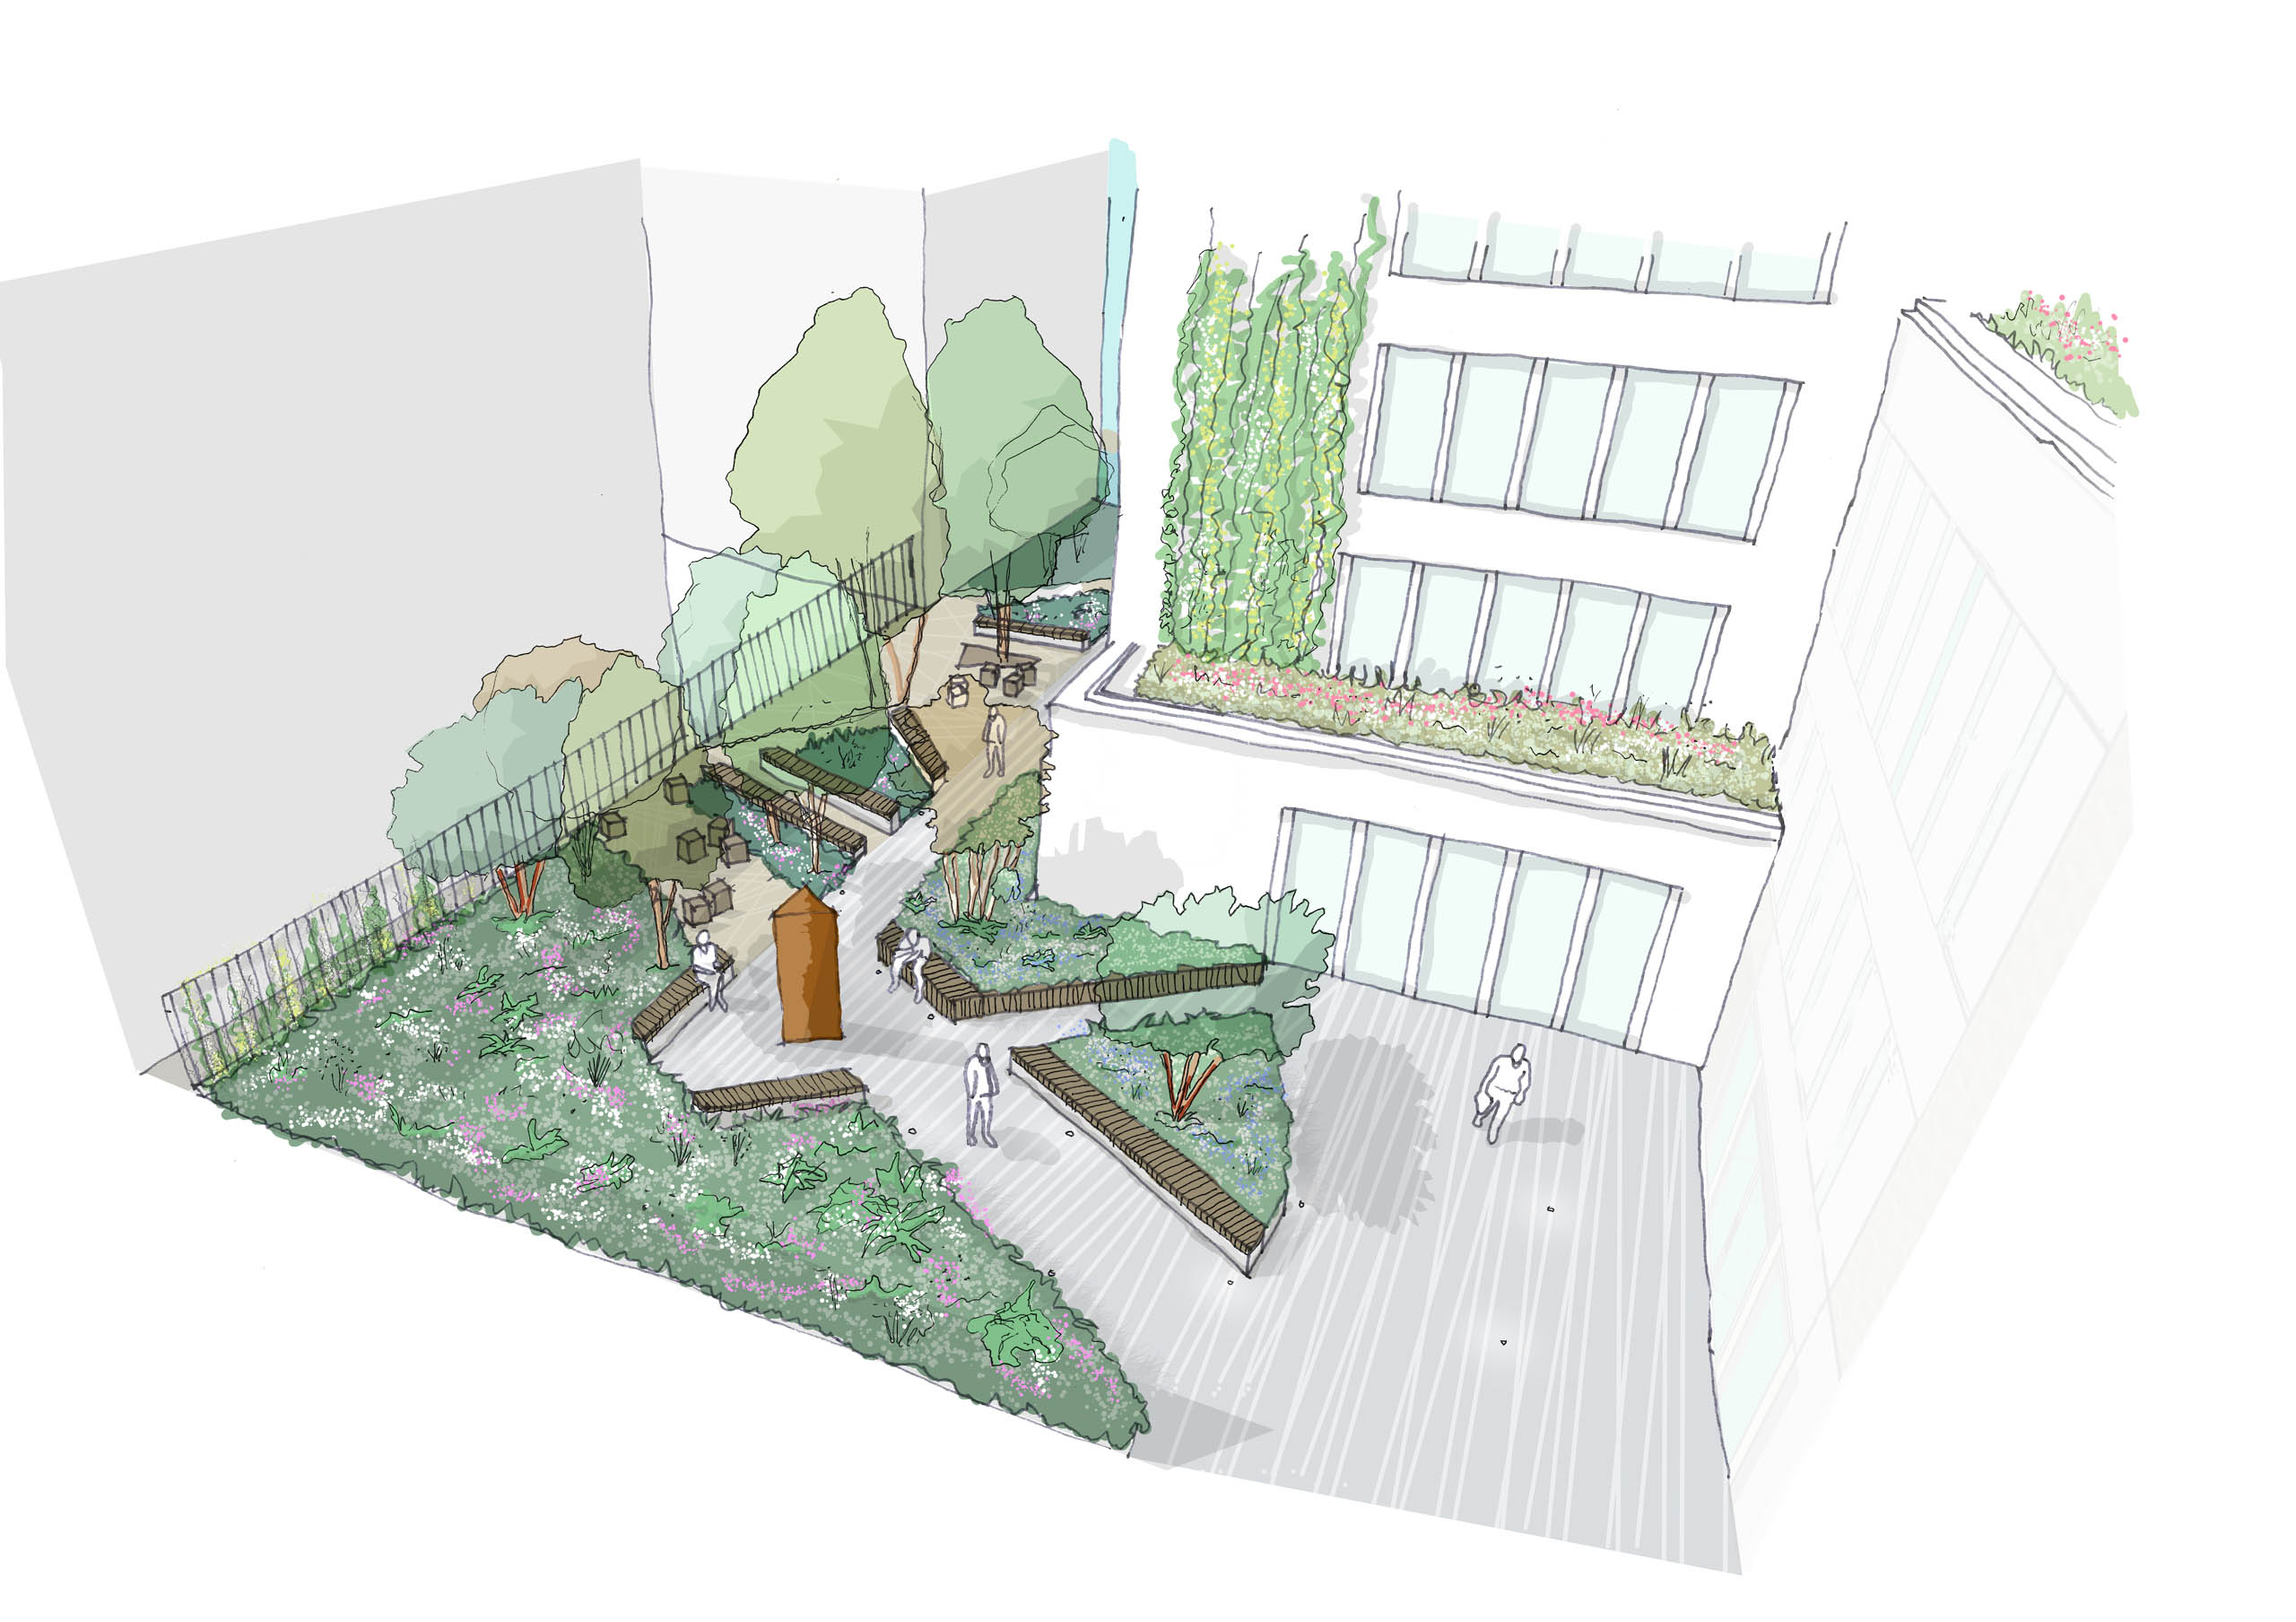 Landscape Architect design water garden plans for backyard  Stock Image   Everypixel